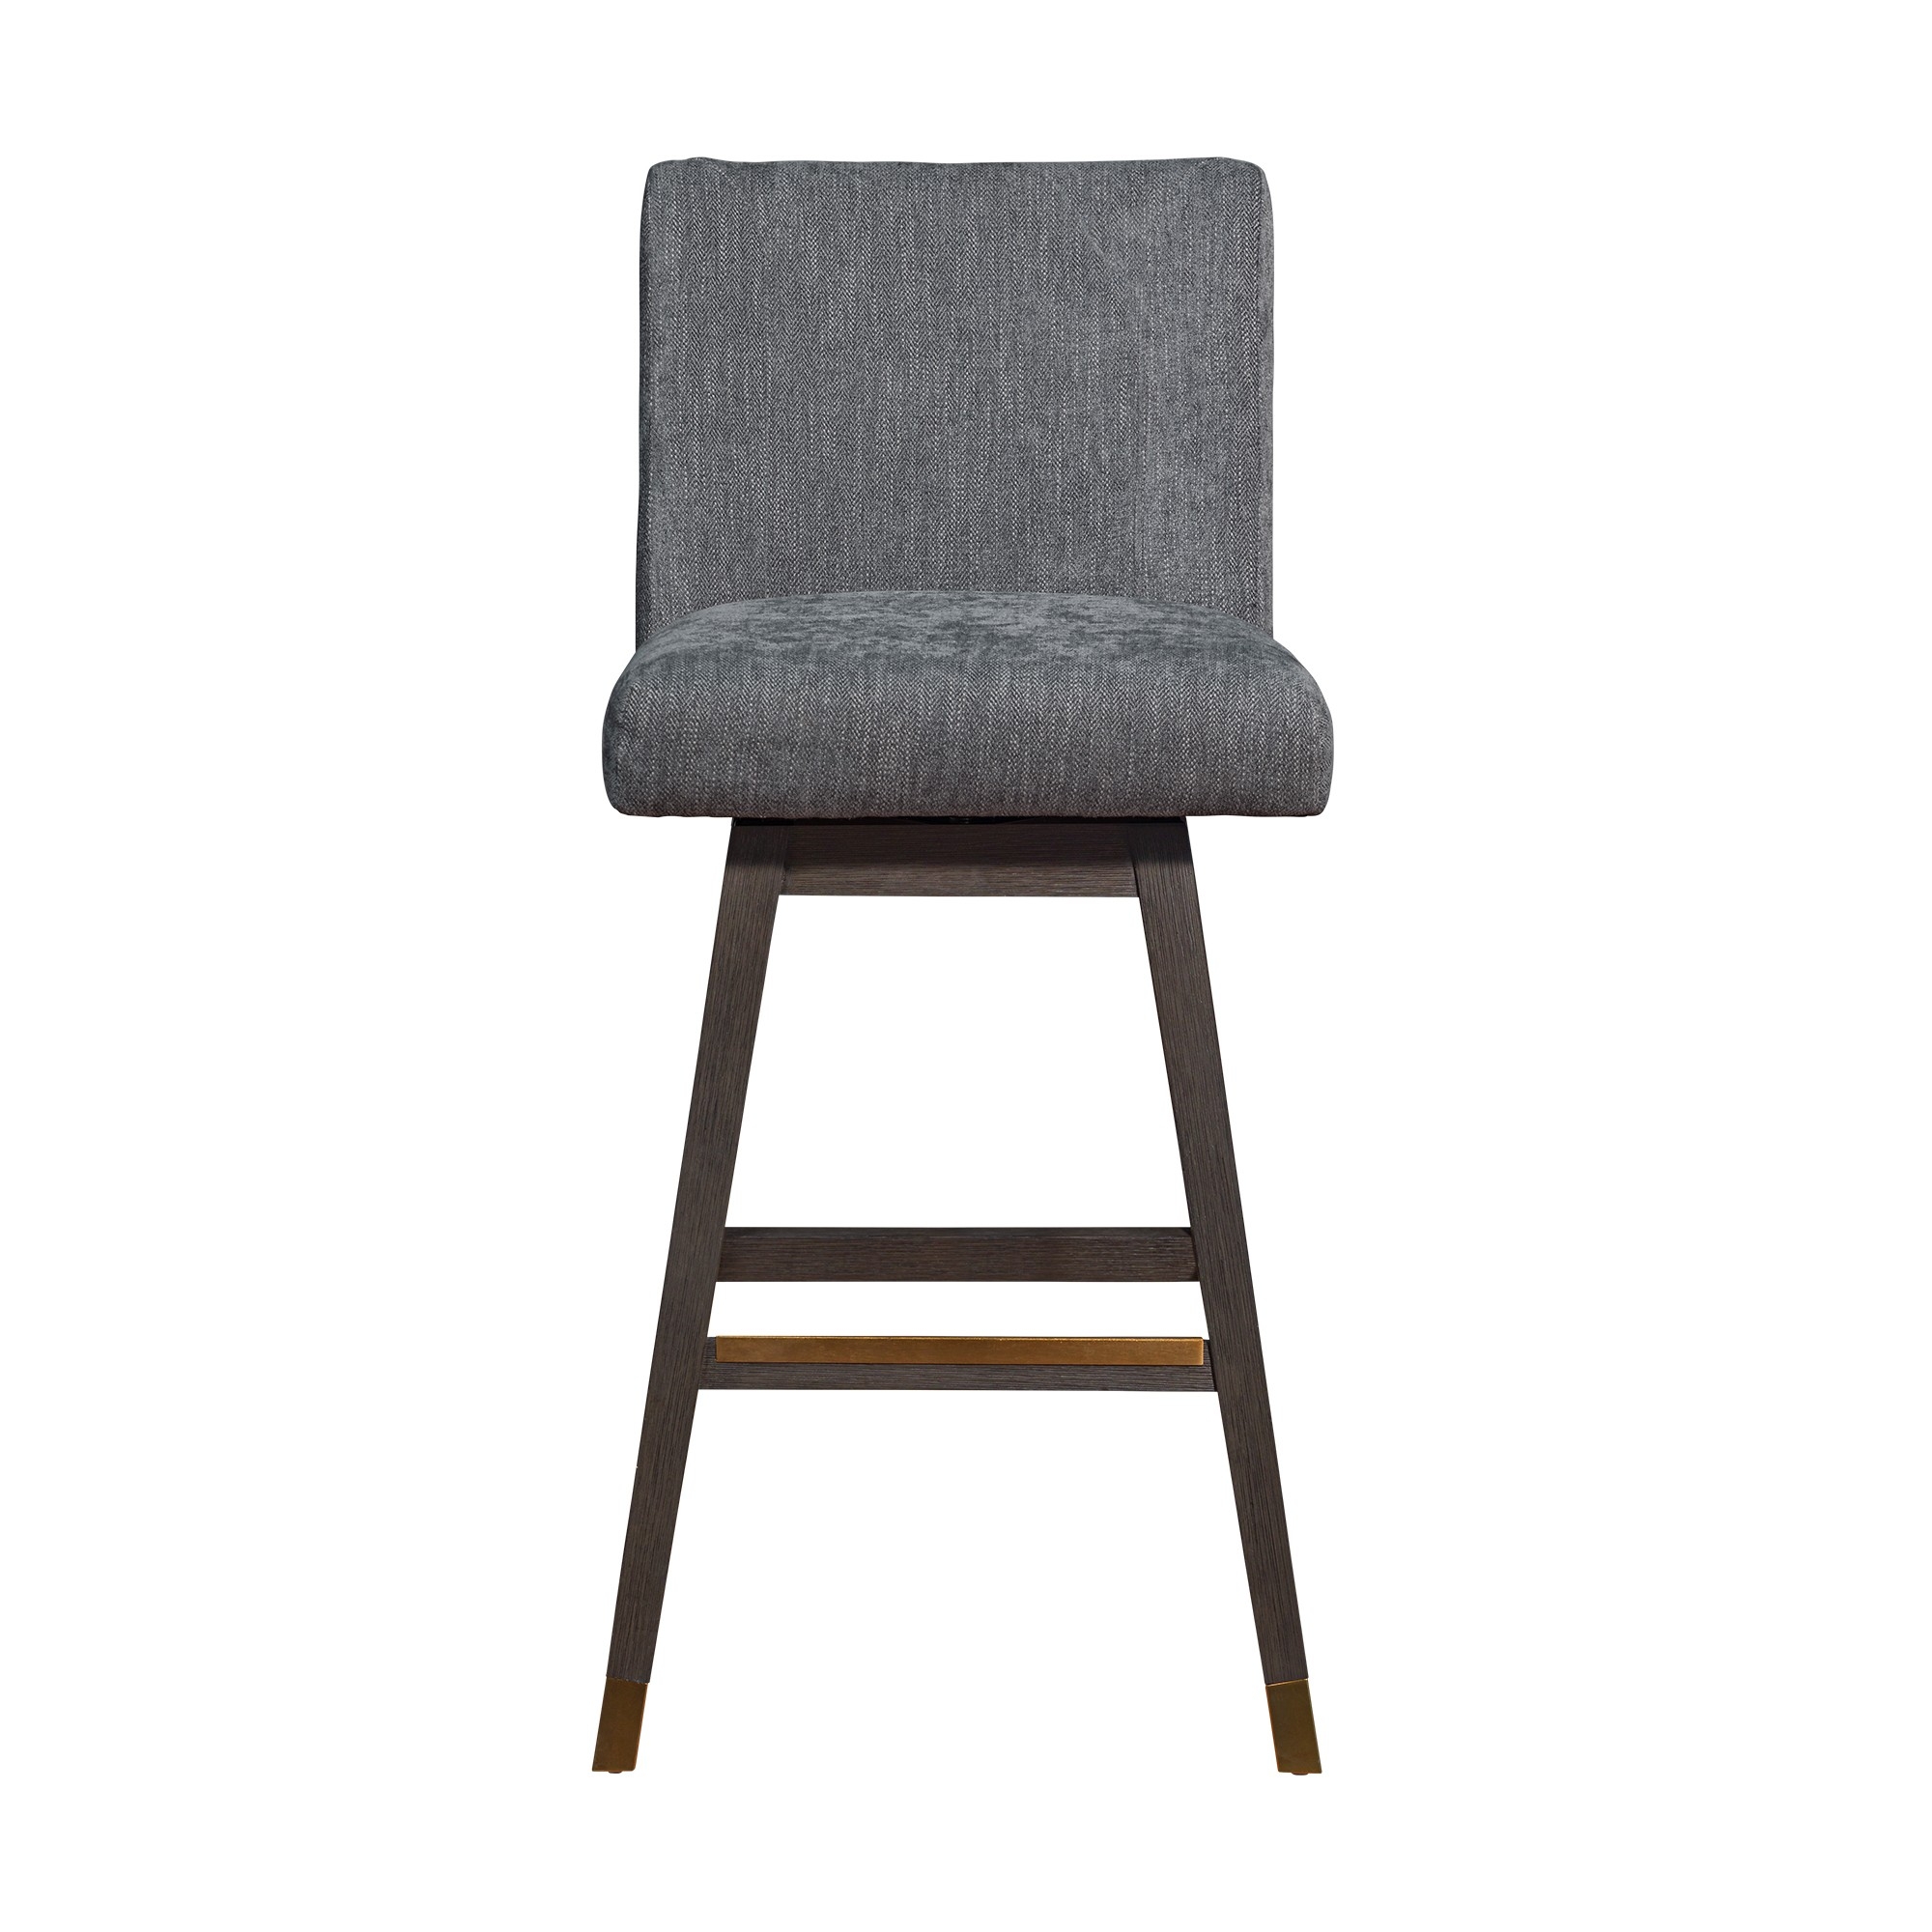 Lia 30 Swivel Barstool Chair, Gray Rubberwood Frame, Dark Gray Polyester- Saltoro Sherpi